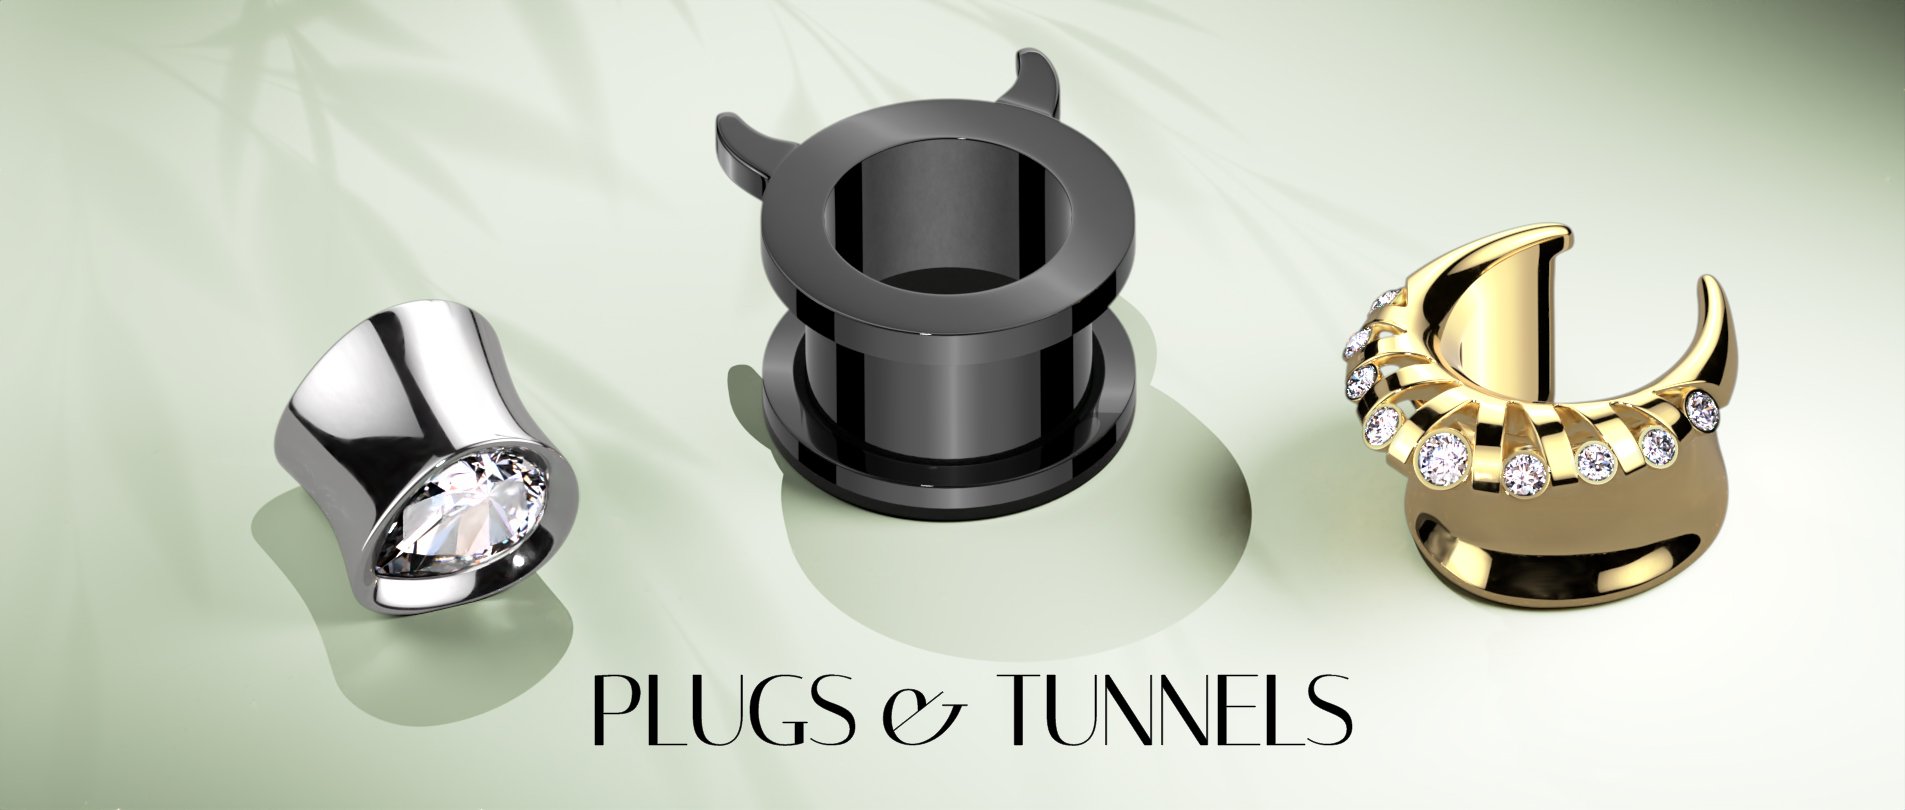 Wholesale Plugs & Tunnels